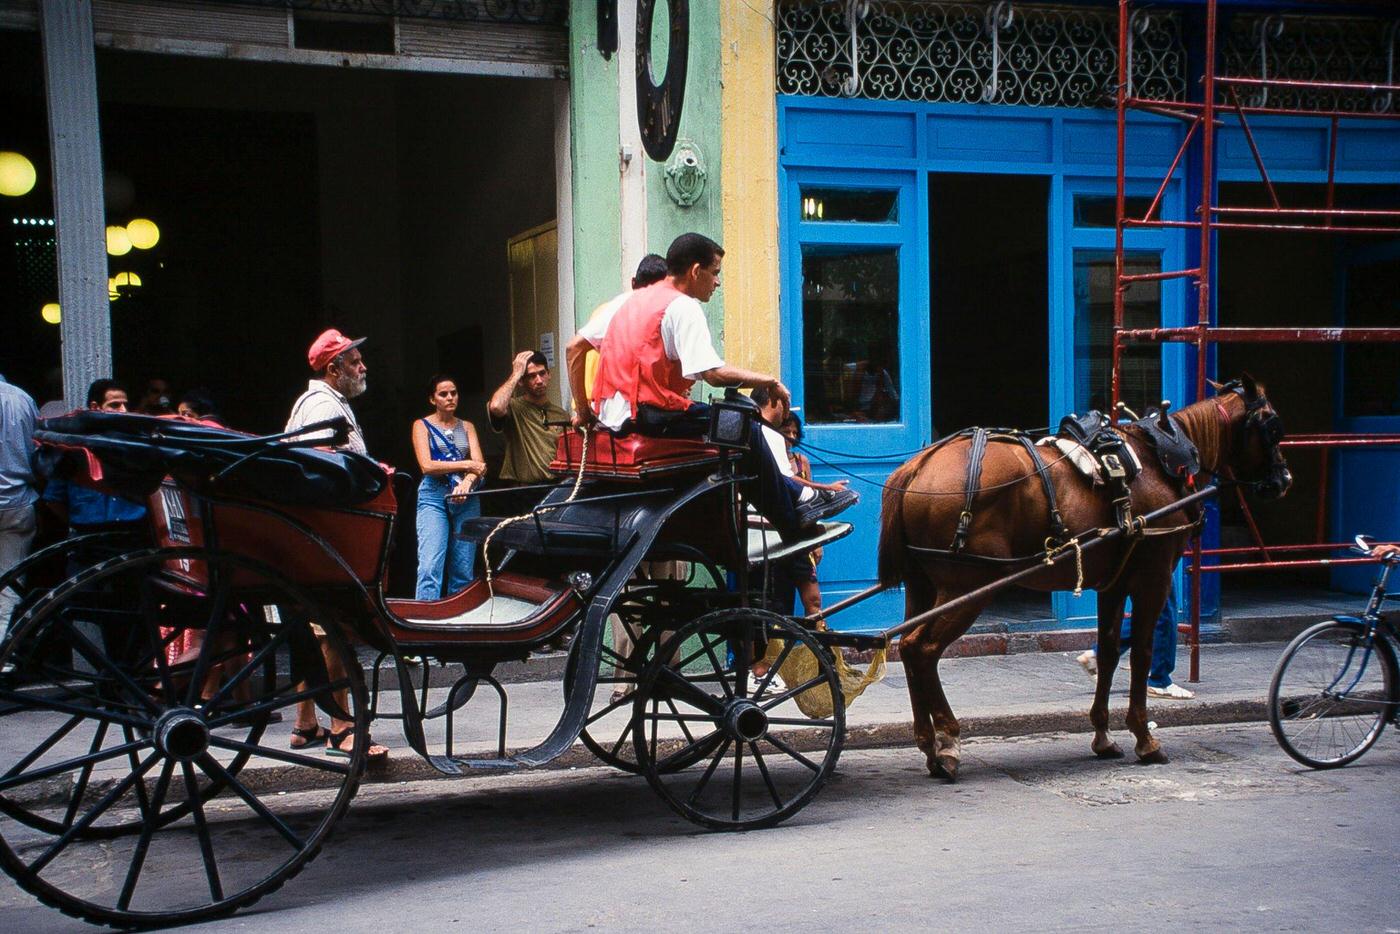 Horse-drawn carriage in Havana, Cuba, June 1999.